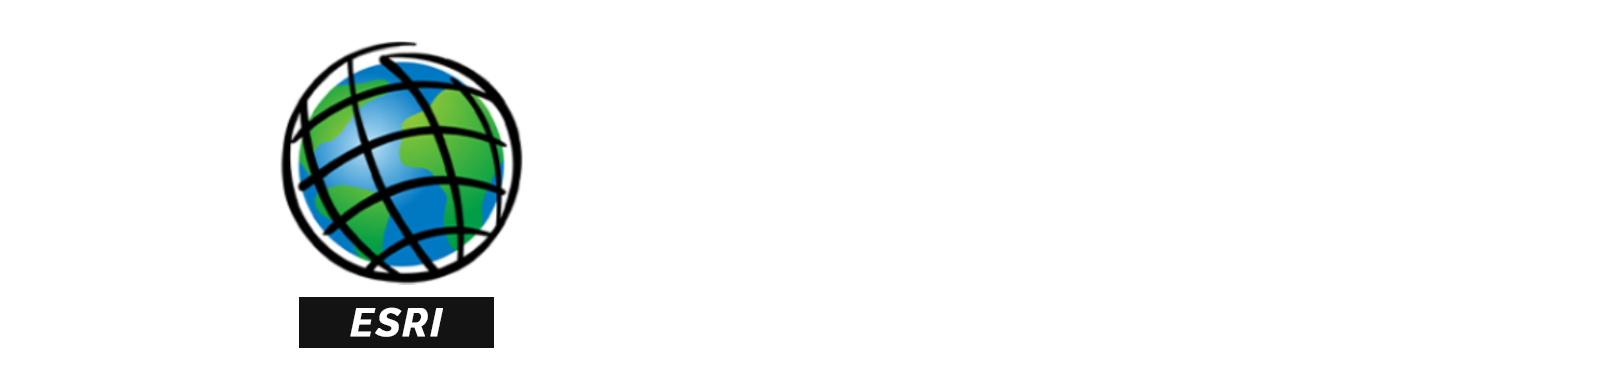 arcgis-logo